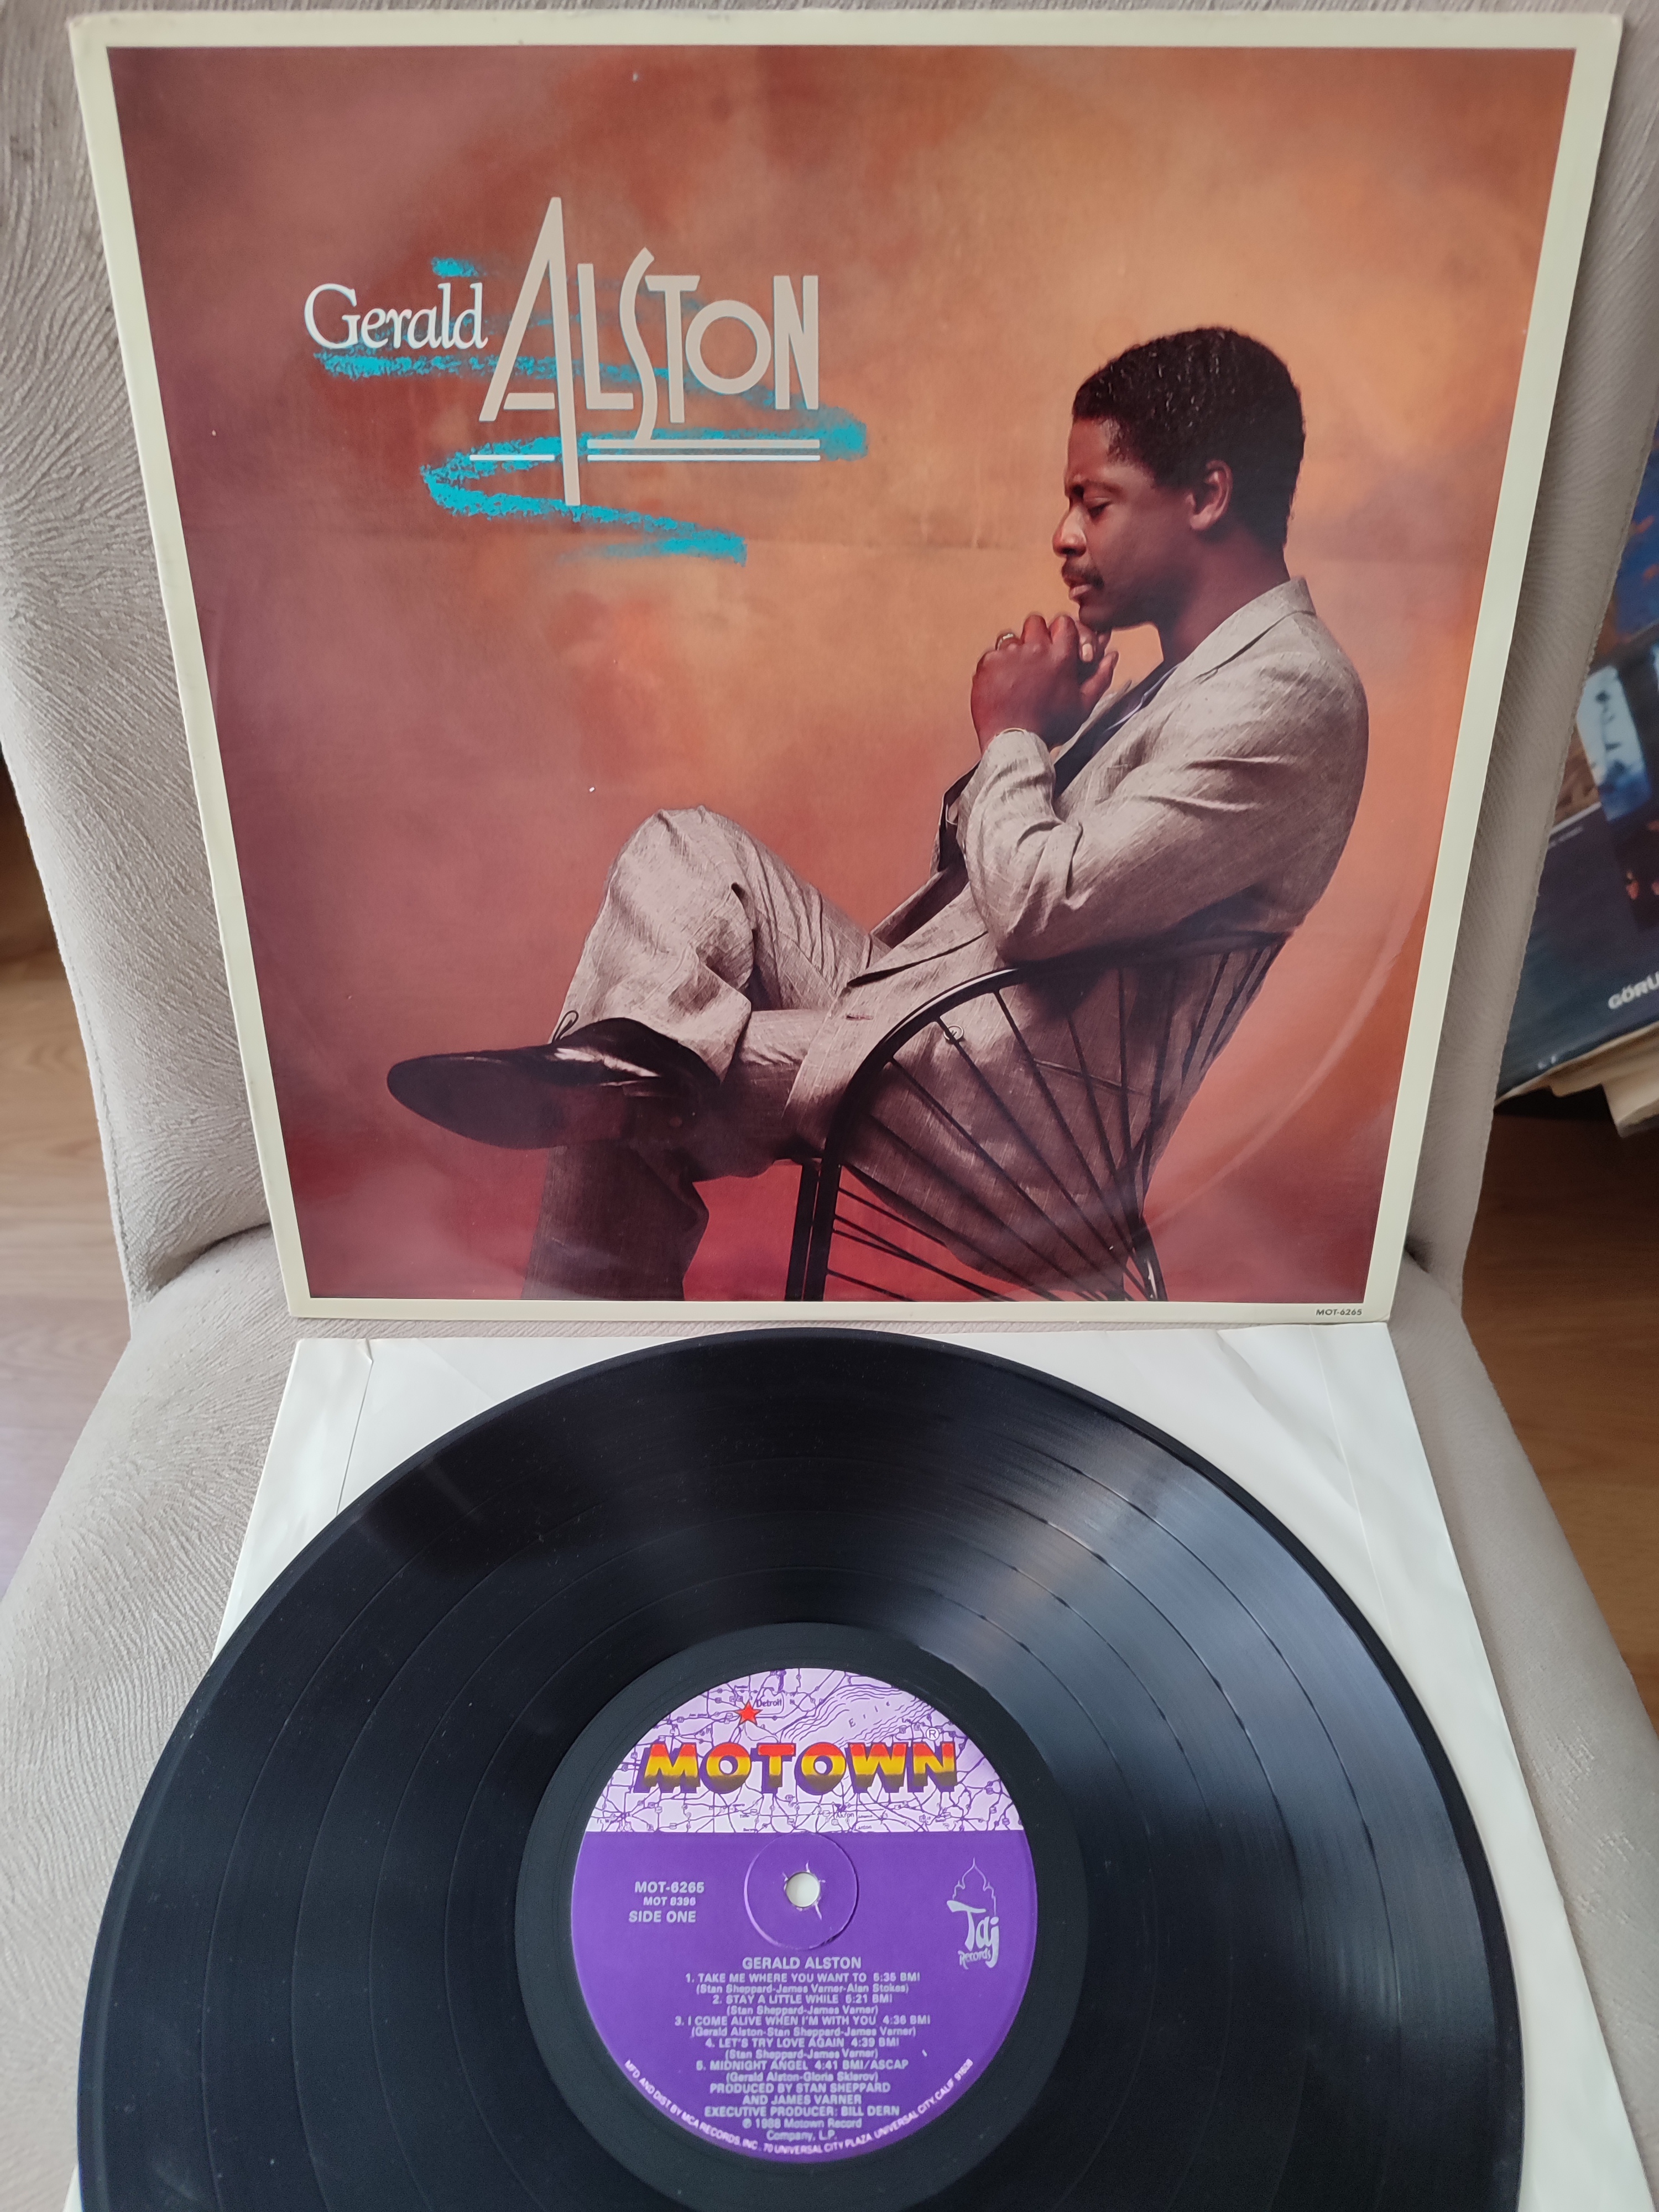 GARY ALSTON - Gerald Alston - 1988 USA Basım Albüm - 33lük LP Plak 2. el